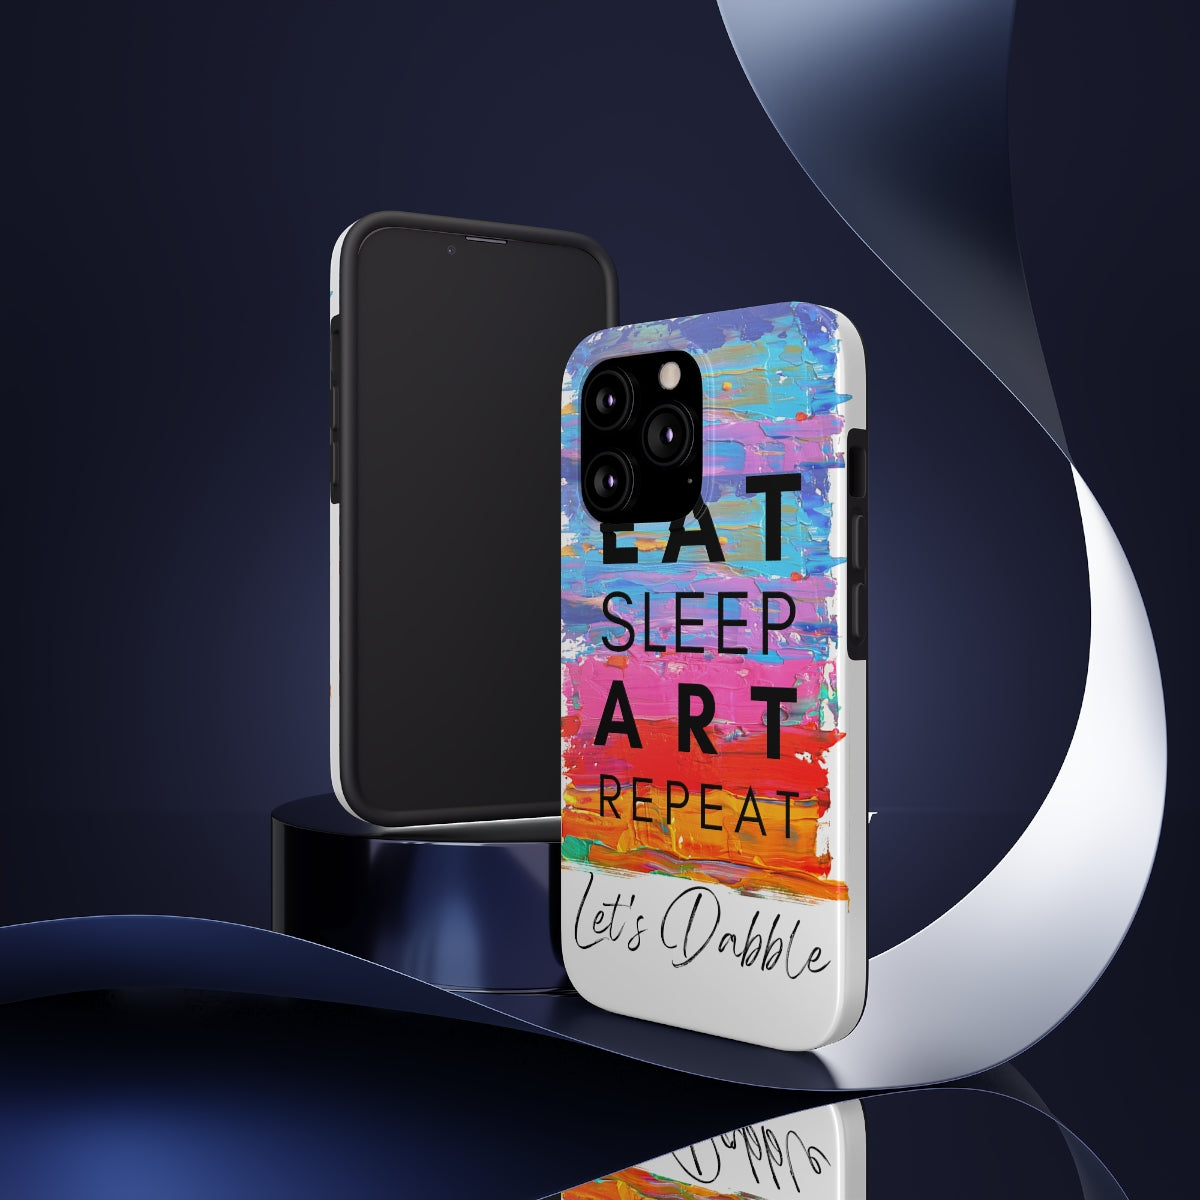 Eat Sleep Art Repeat Ultra Tough Art Phone Case